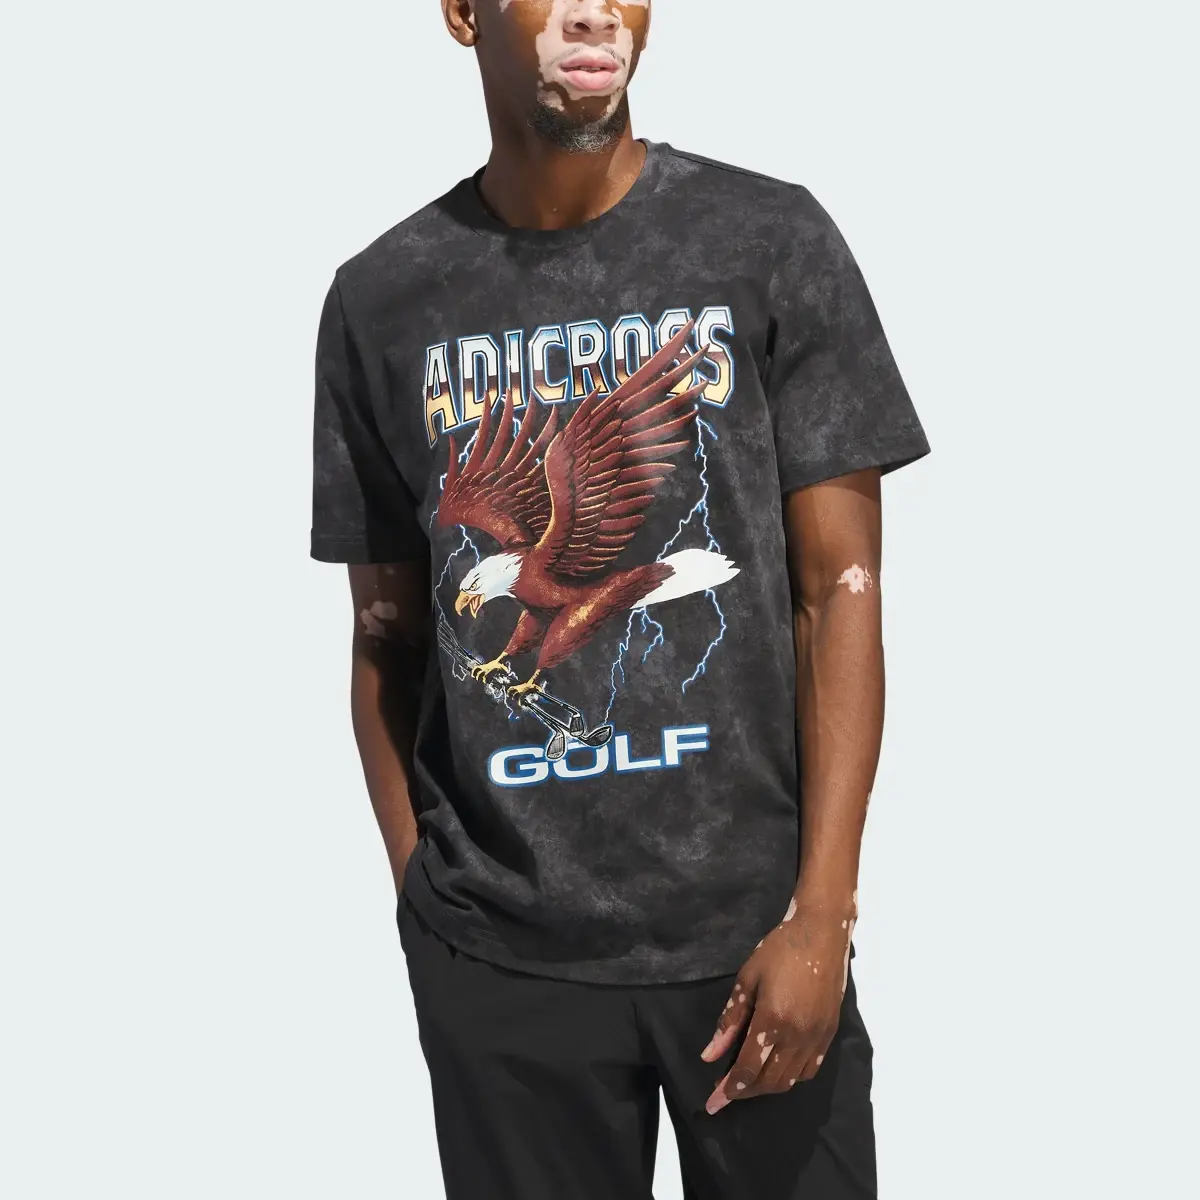 Adidas Adicross Eagle Graphic T-Shirt. 1